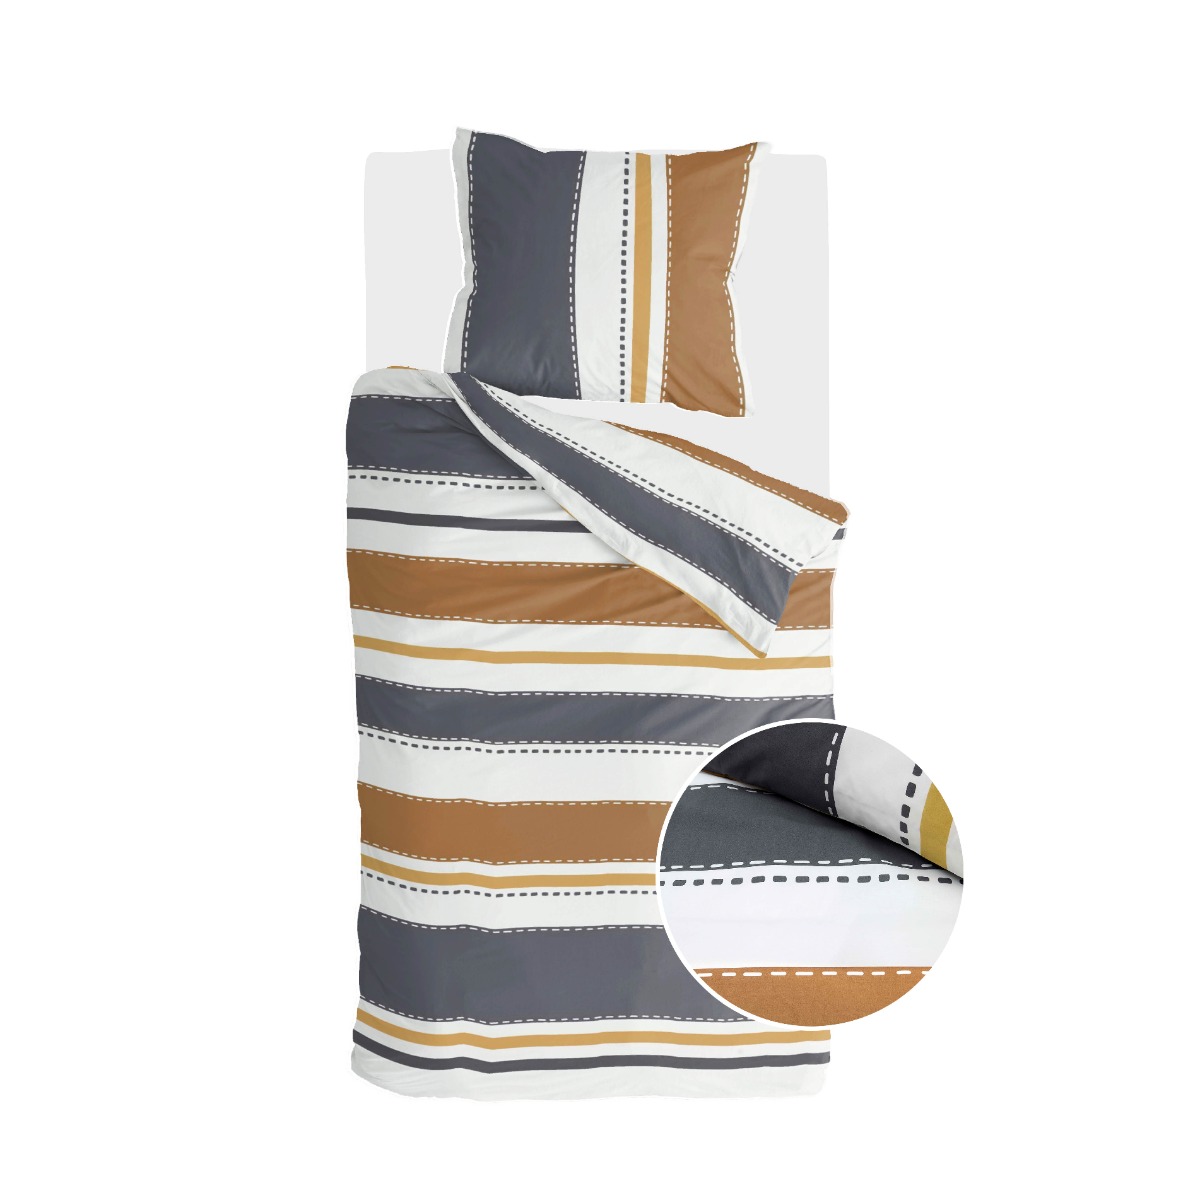 WALRA Dekbedovertrek Stripes & Stitches Antraciet - 140x220 cm